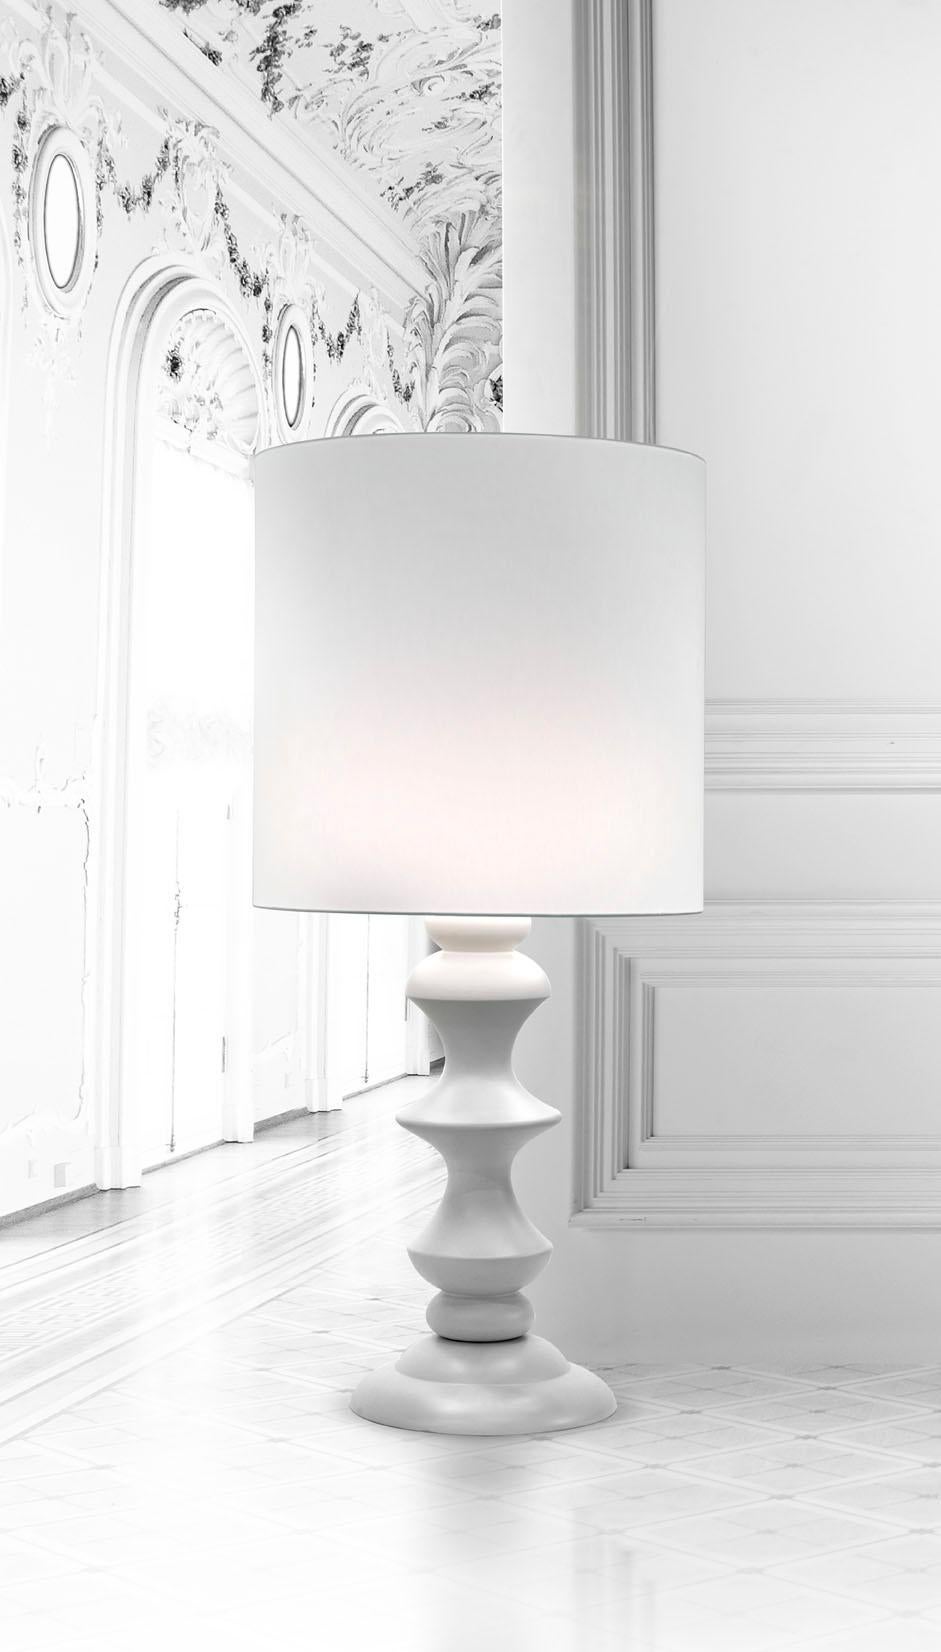 Ceramic lamp MIDA2
cod. LM002
white glazed
with cotton lampshade

Measures: 
H. 120.0 cm.
Dm. 50.0 cm.